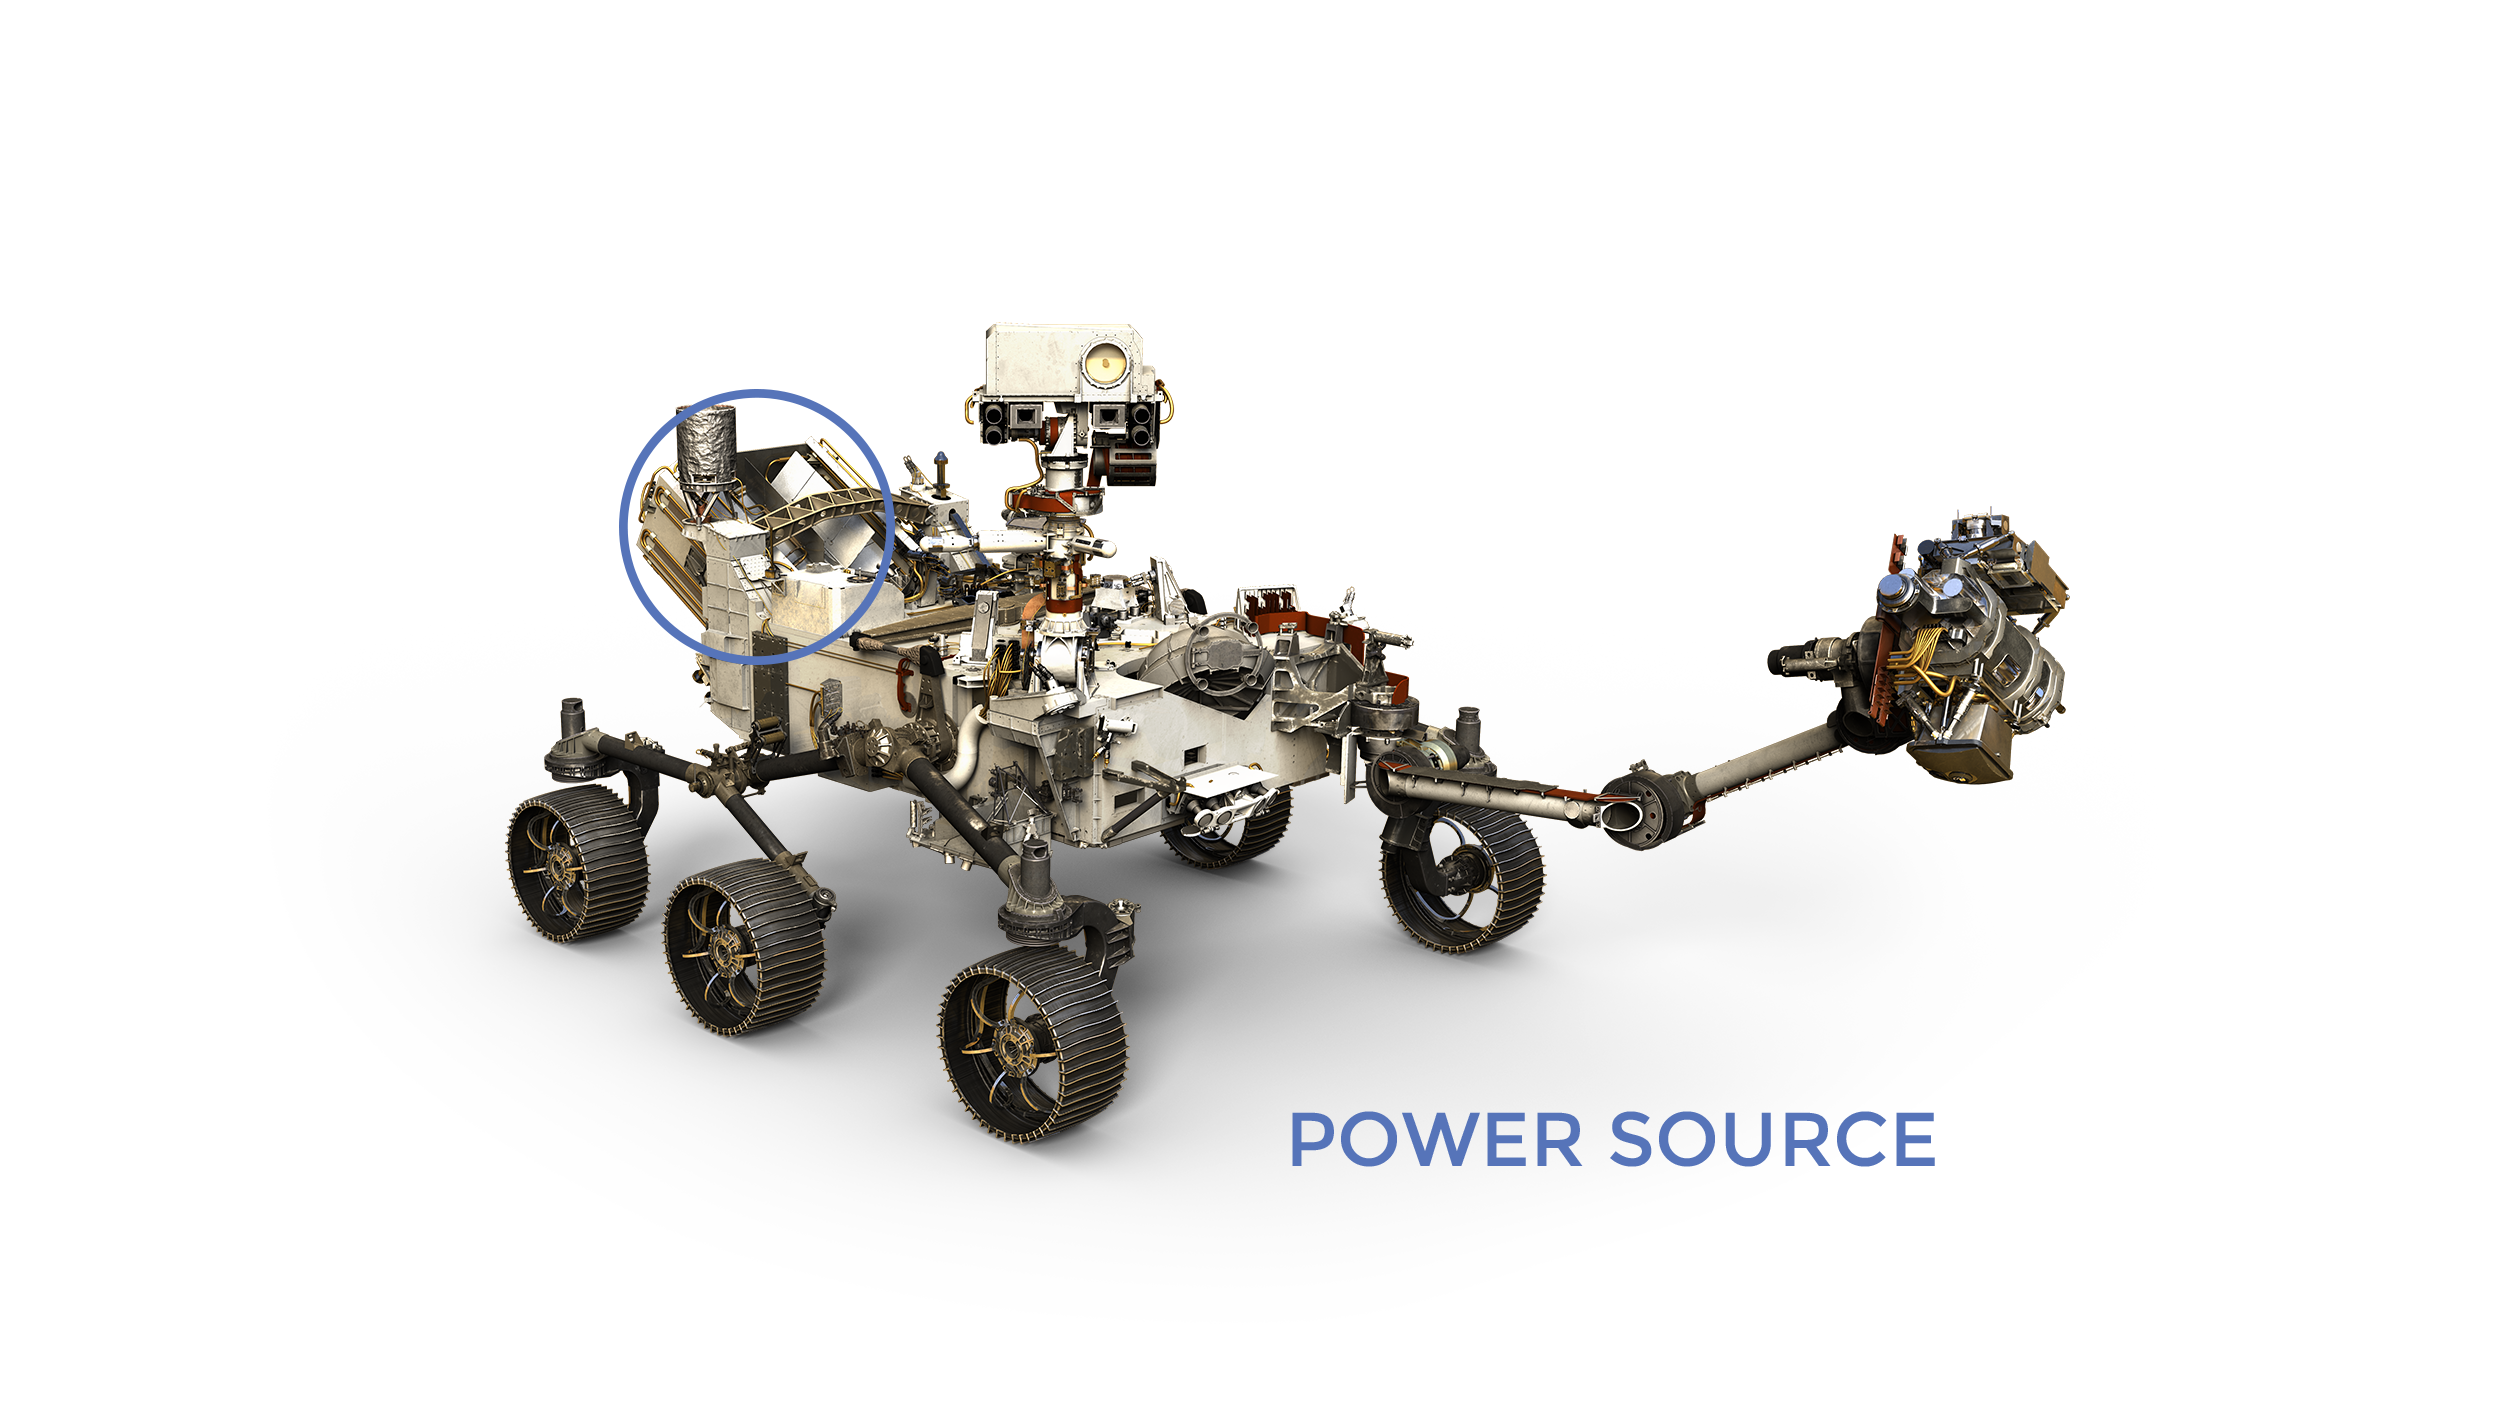 Mars 2020 Power labeled on model